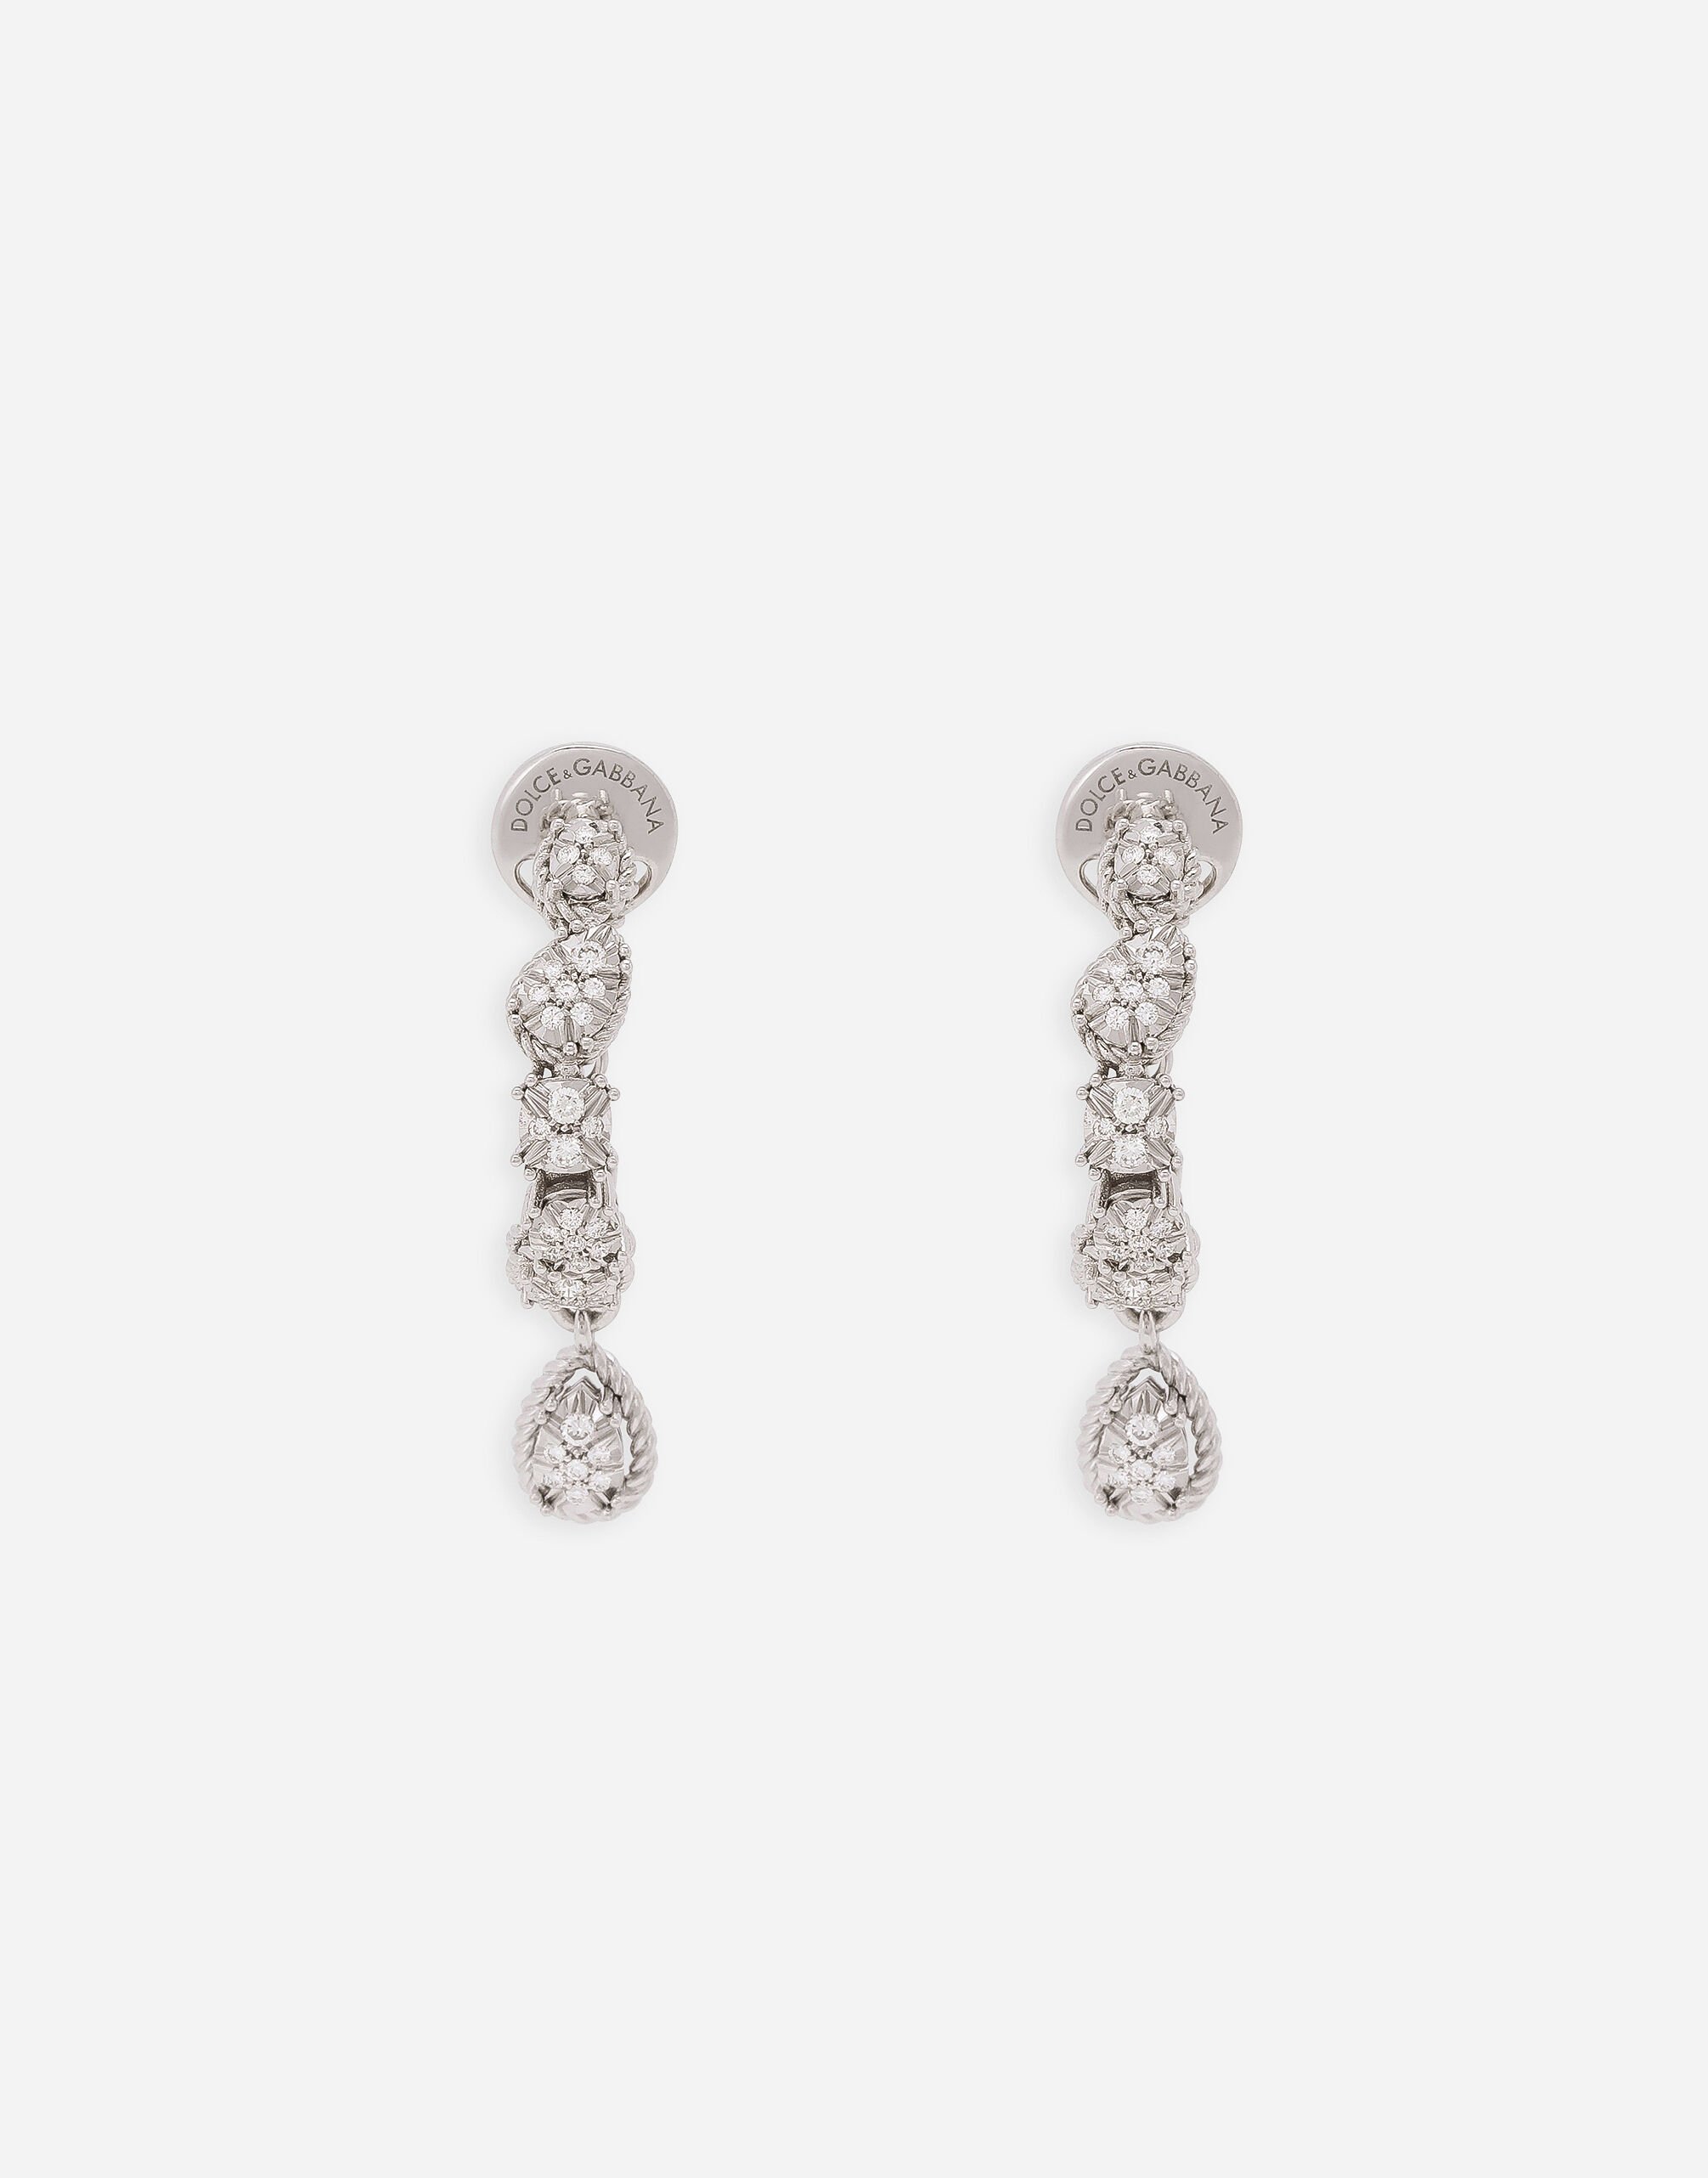 Dolce & Gabbana Easy Diamond earrings in white gold 18kt and diamonds pavé Red WSQB1GWQM01